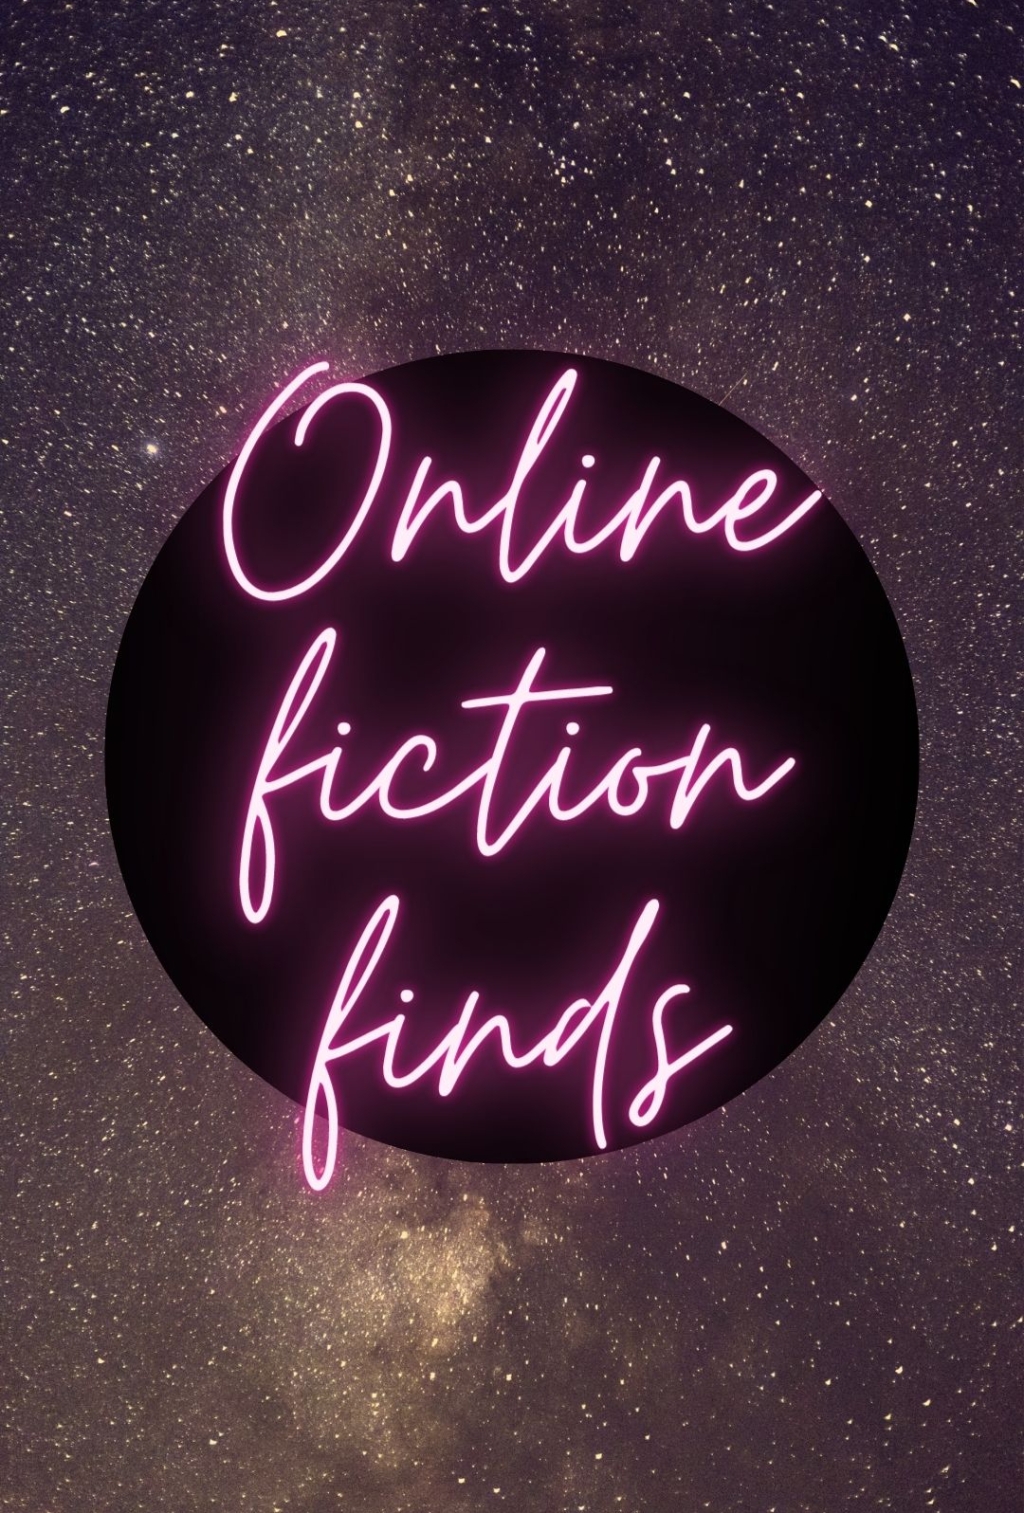 Online fiction finds